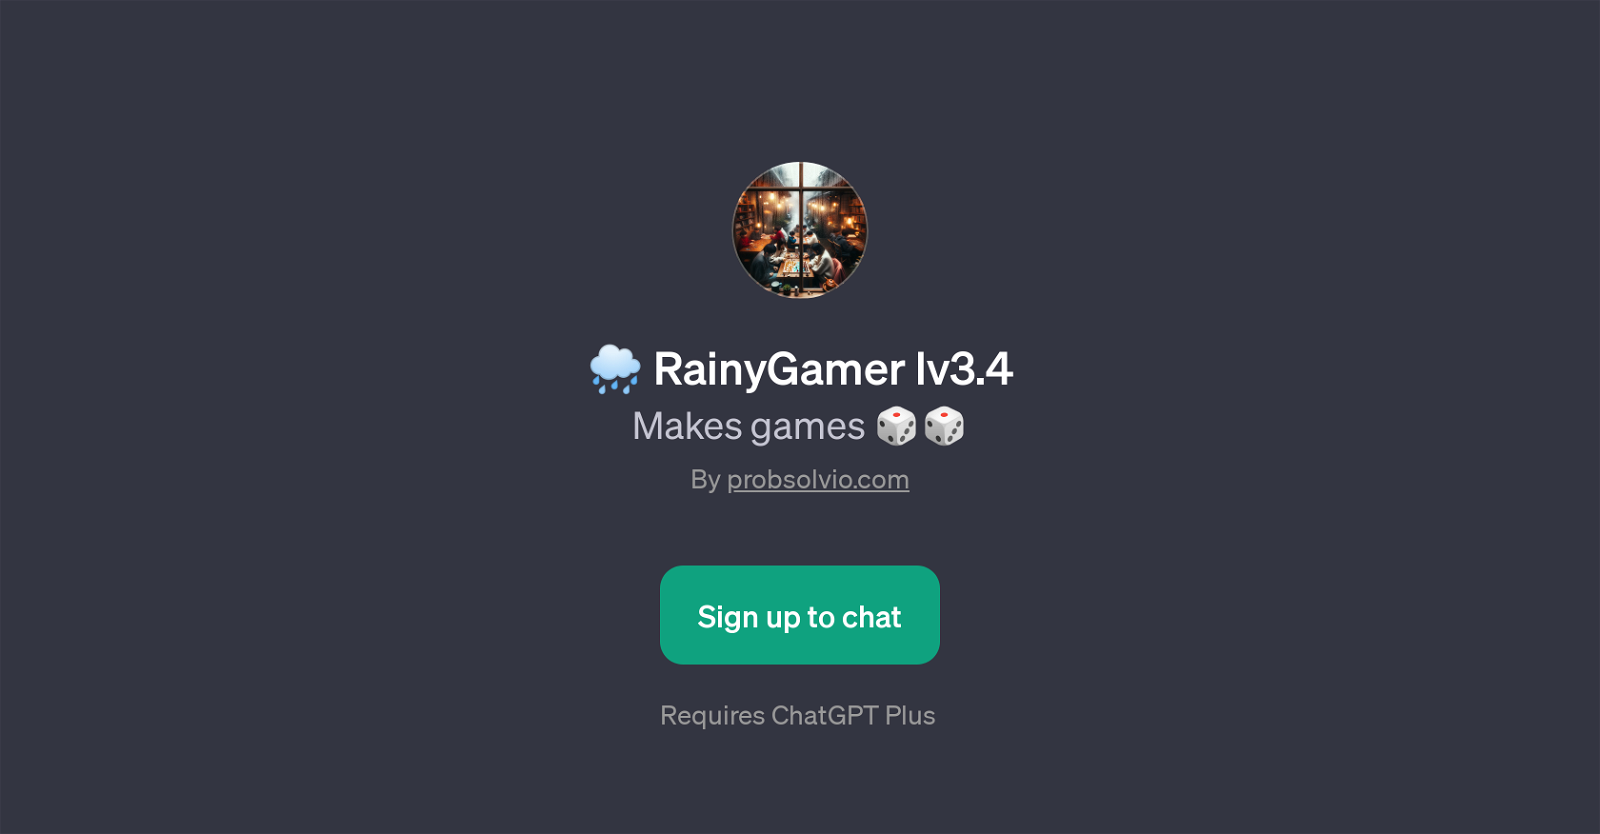 RainyGamer lv3.4 website